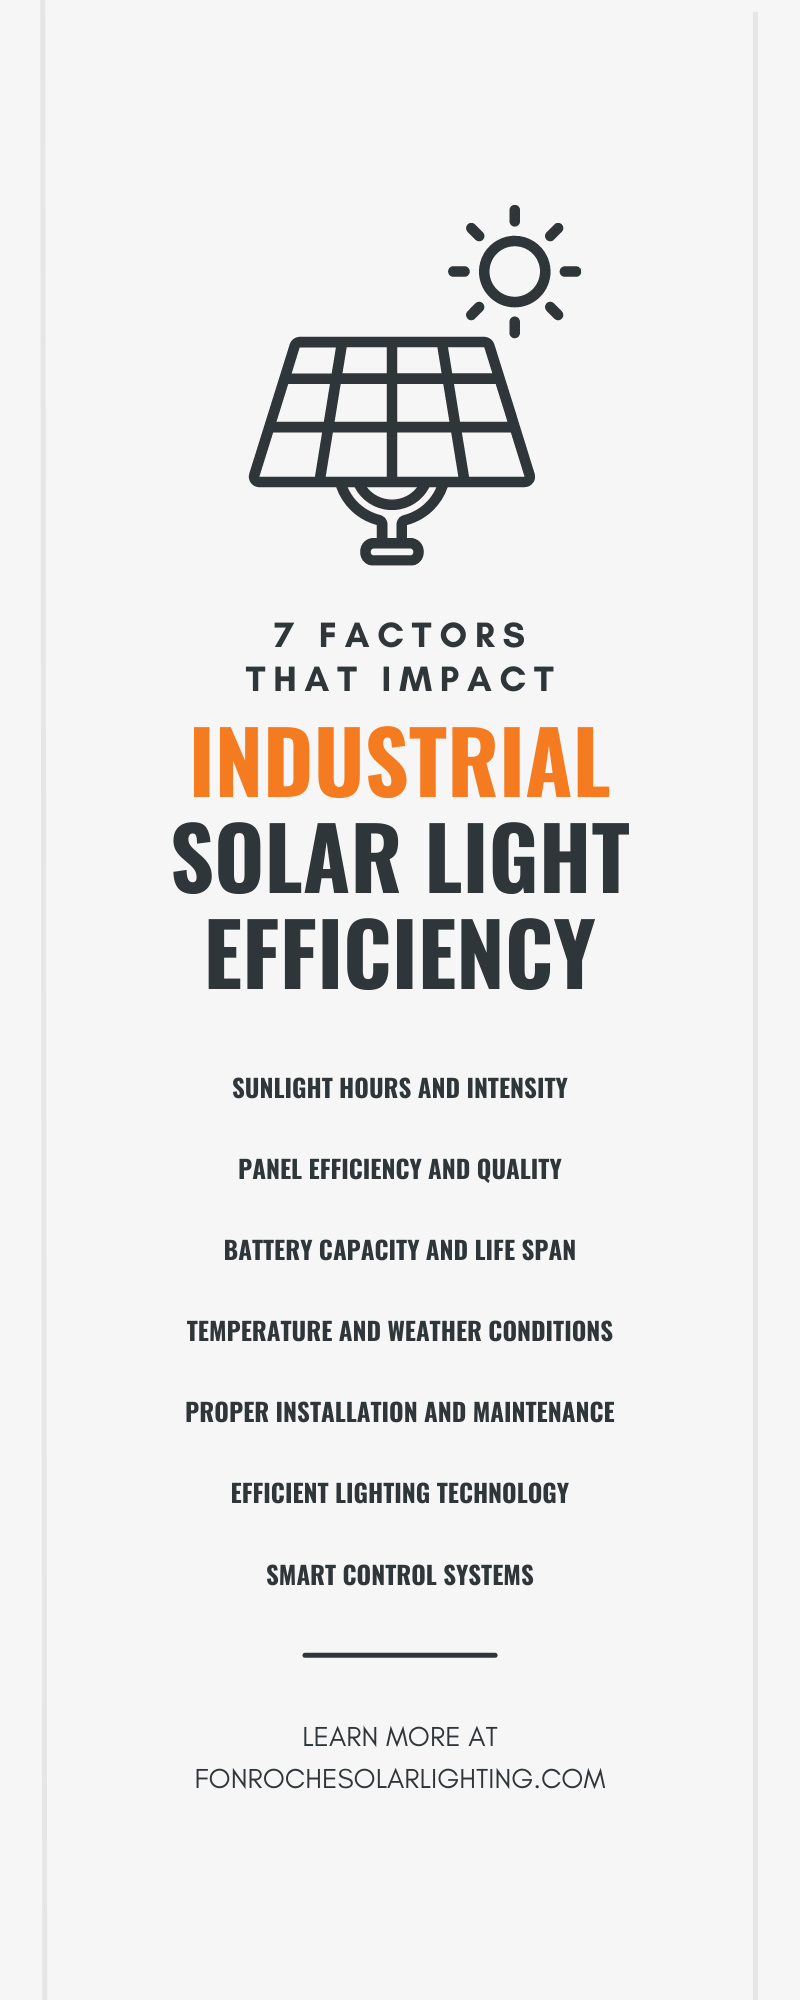 7 Factors That Impact Industrial Solar Light Efficiency
